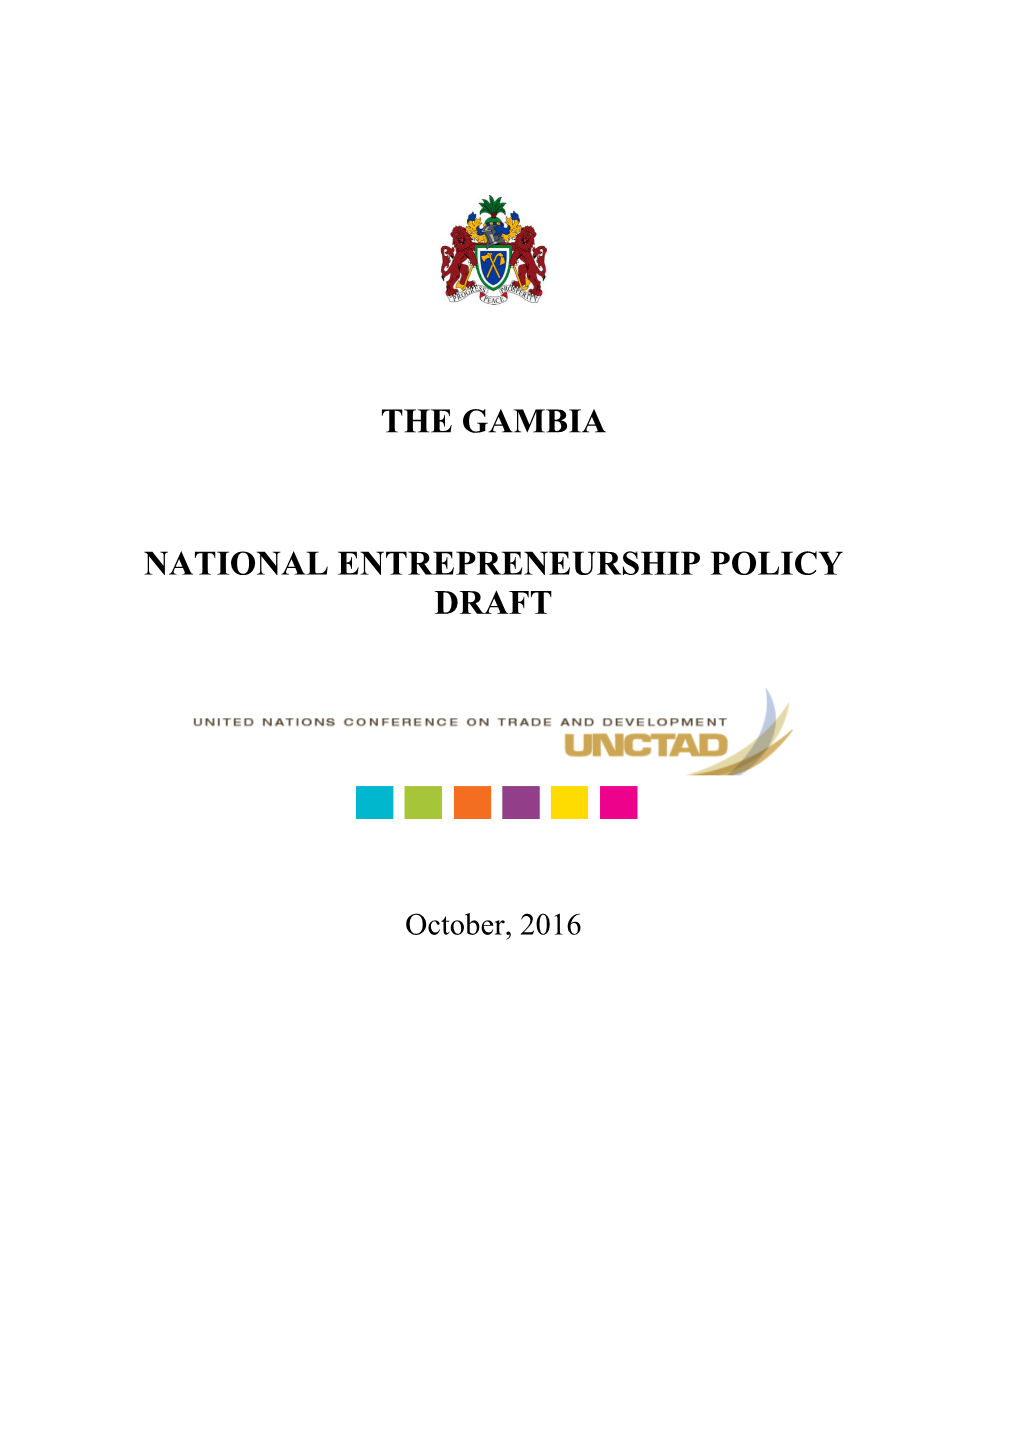 The Gambia National Entrepreneurship Policy